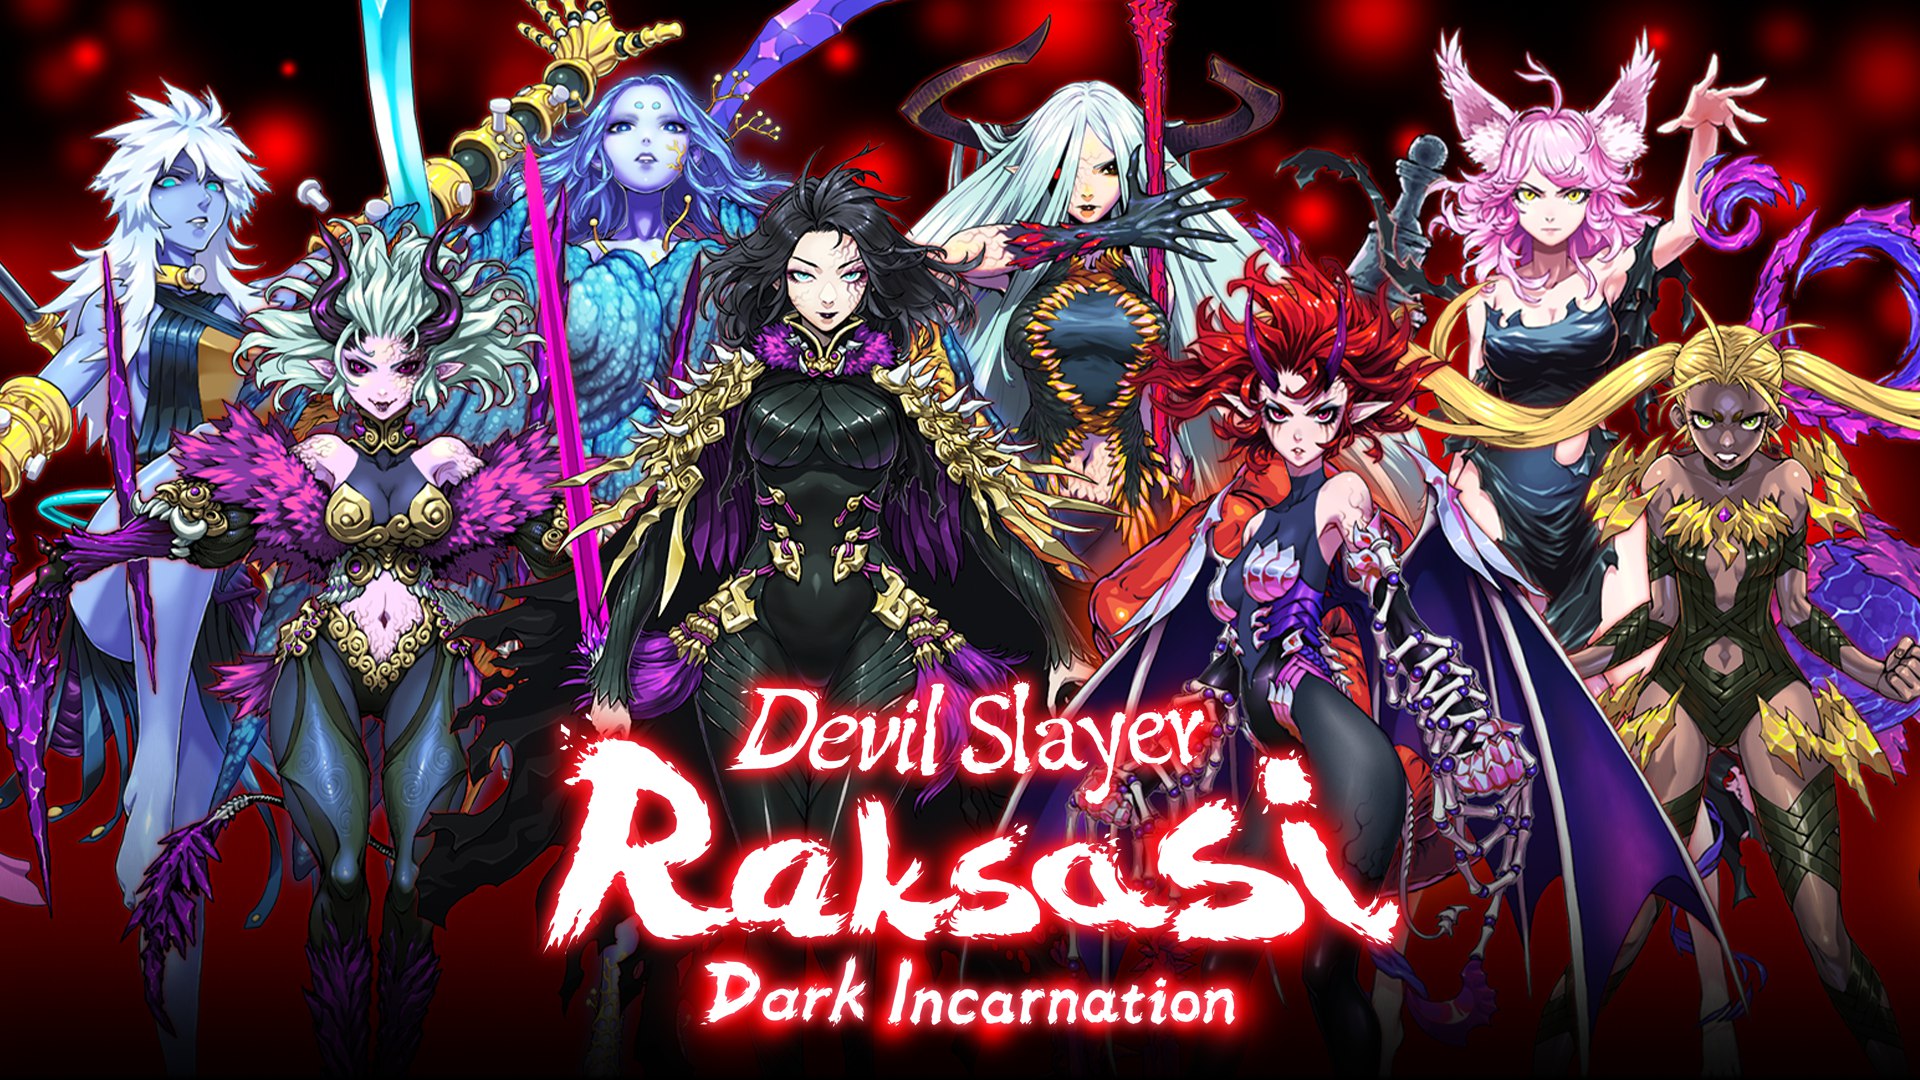 Devil Slayer Raksasi: Incarnation of Darkness